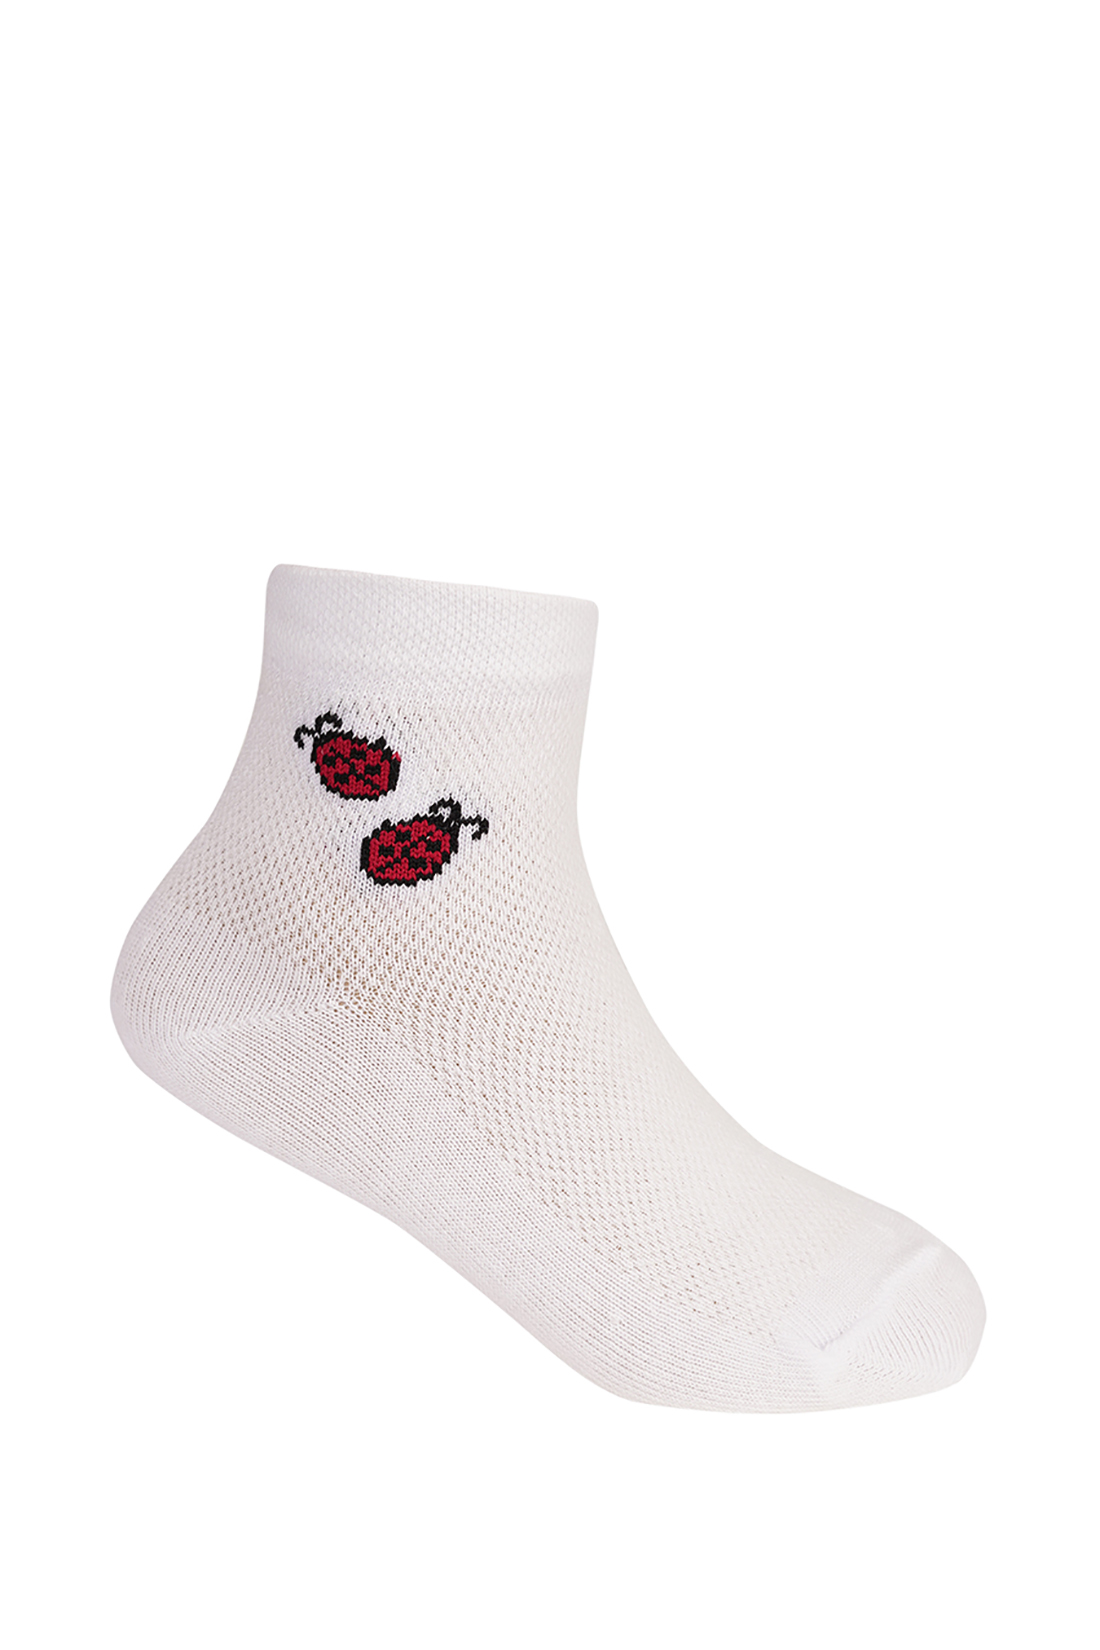 Носки для девочки (арт. baon BK390013), размер 32/34, цвет белый